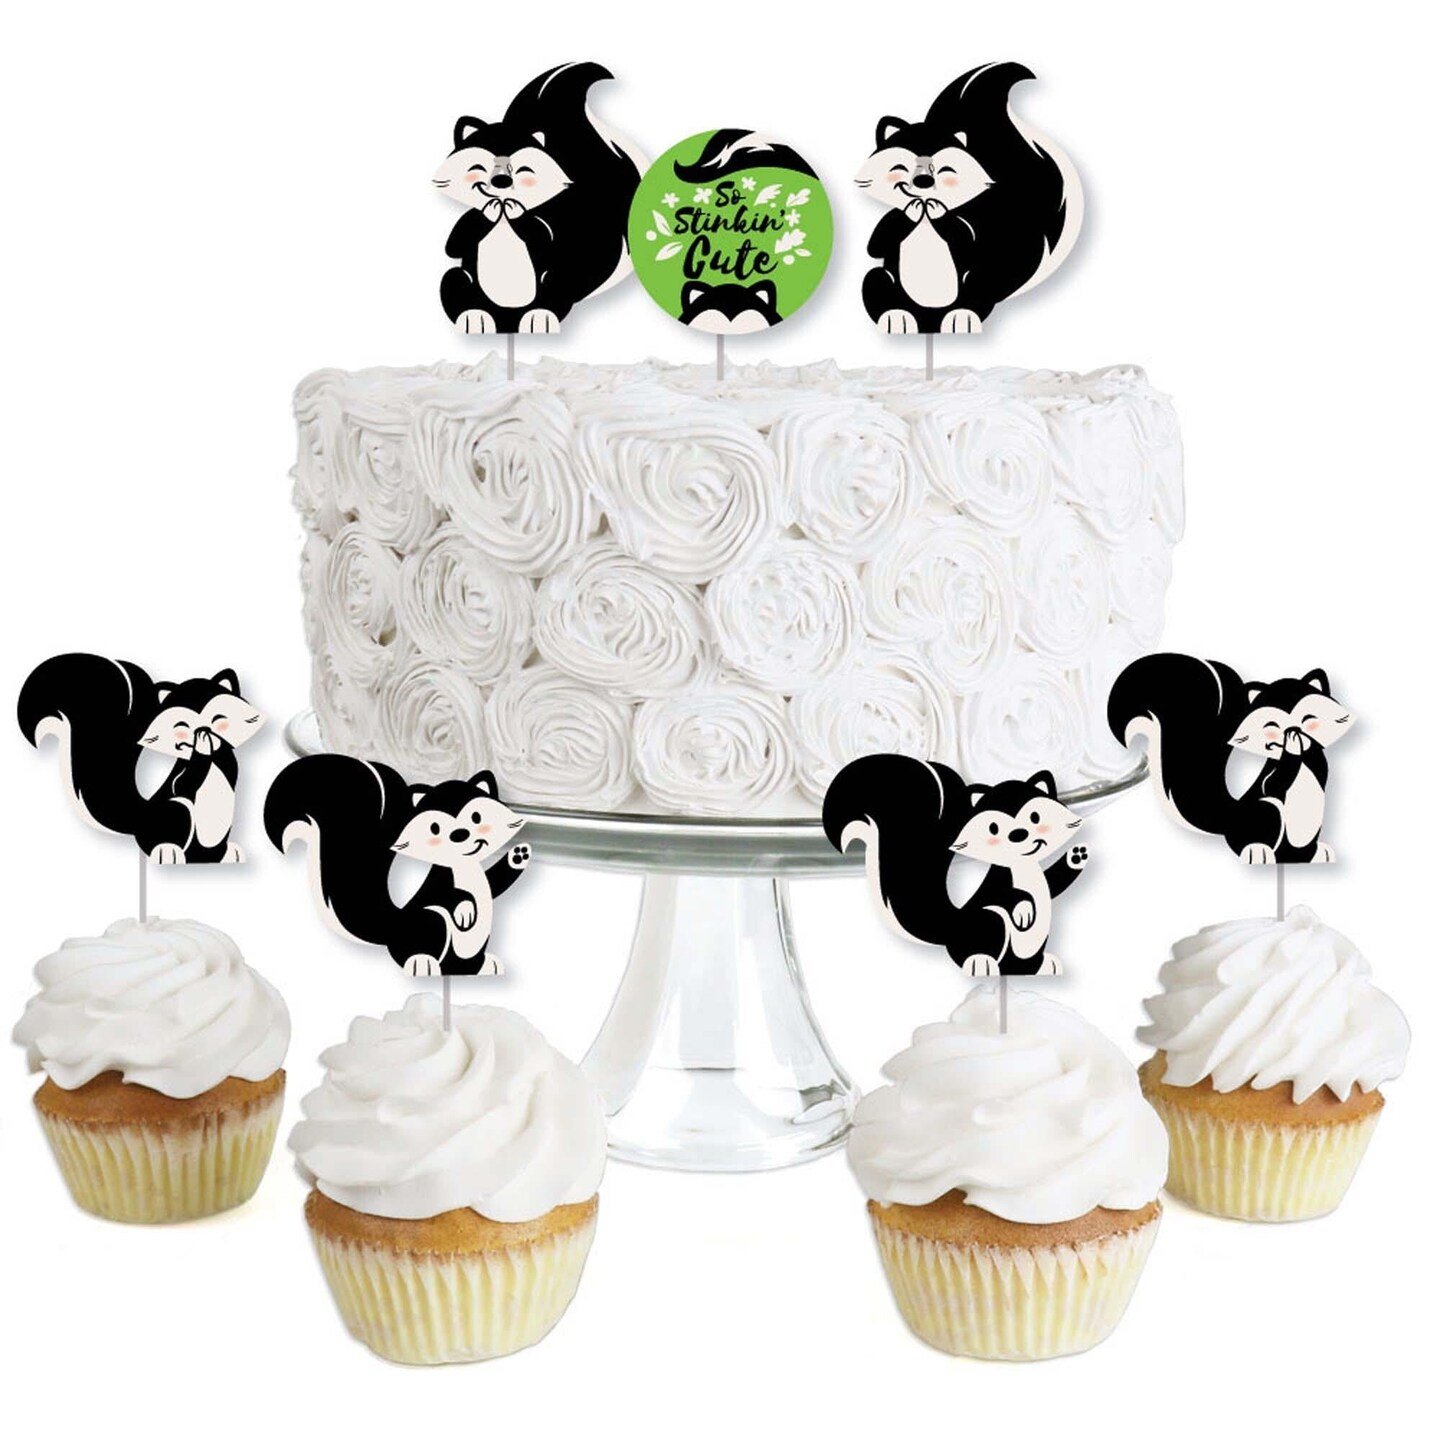 Cupcakes, Birthday Cakes, Engagement Cakes, Wedding Cakes: Pepe Le Pew Skunk  Cake Design